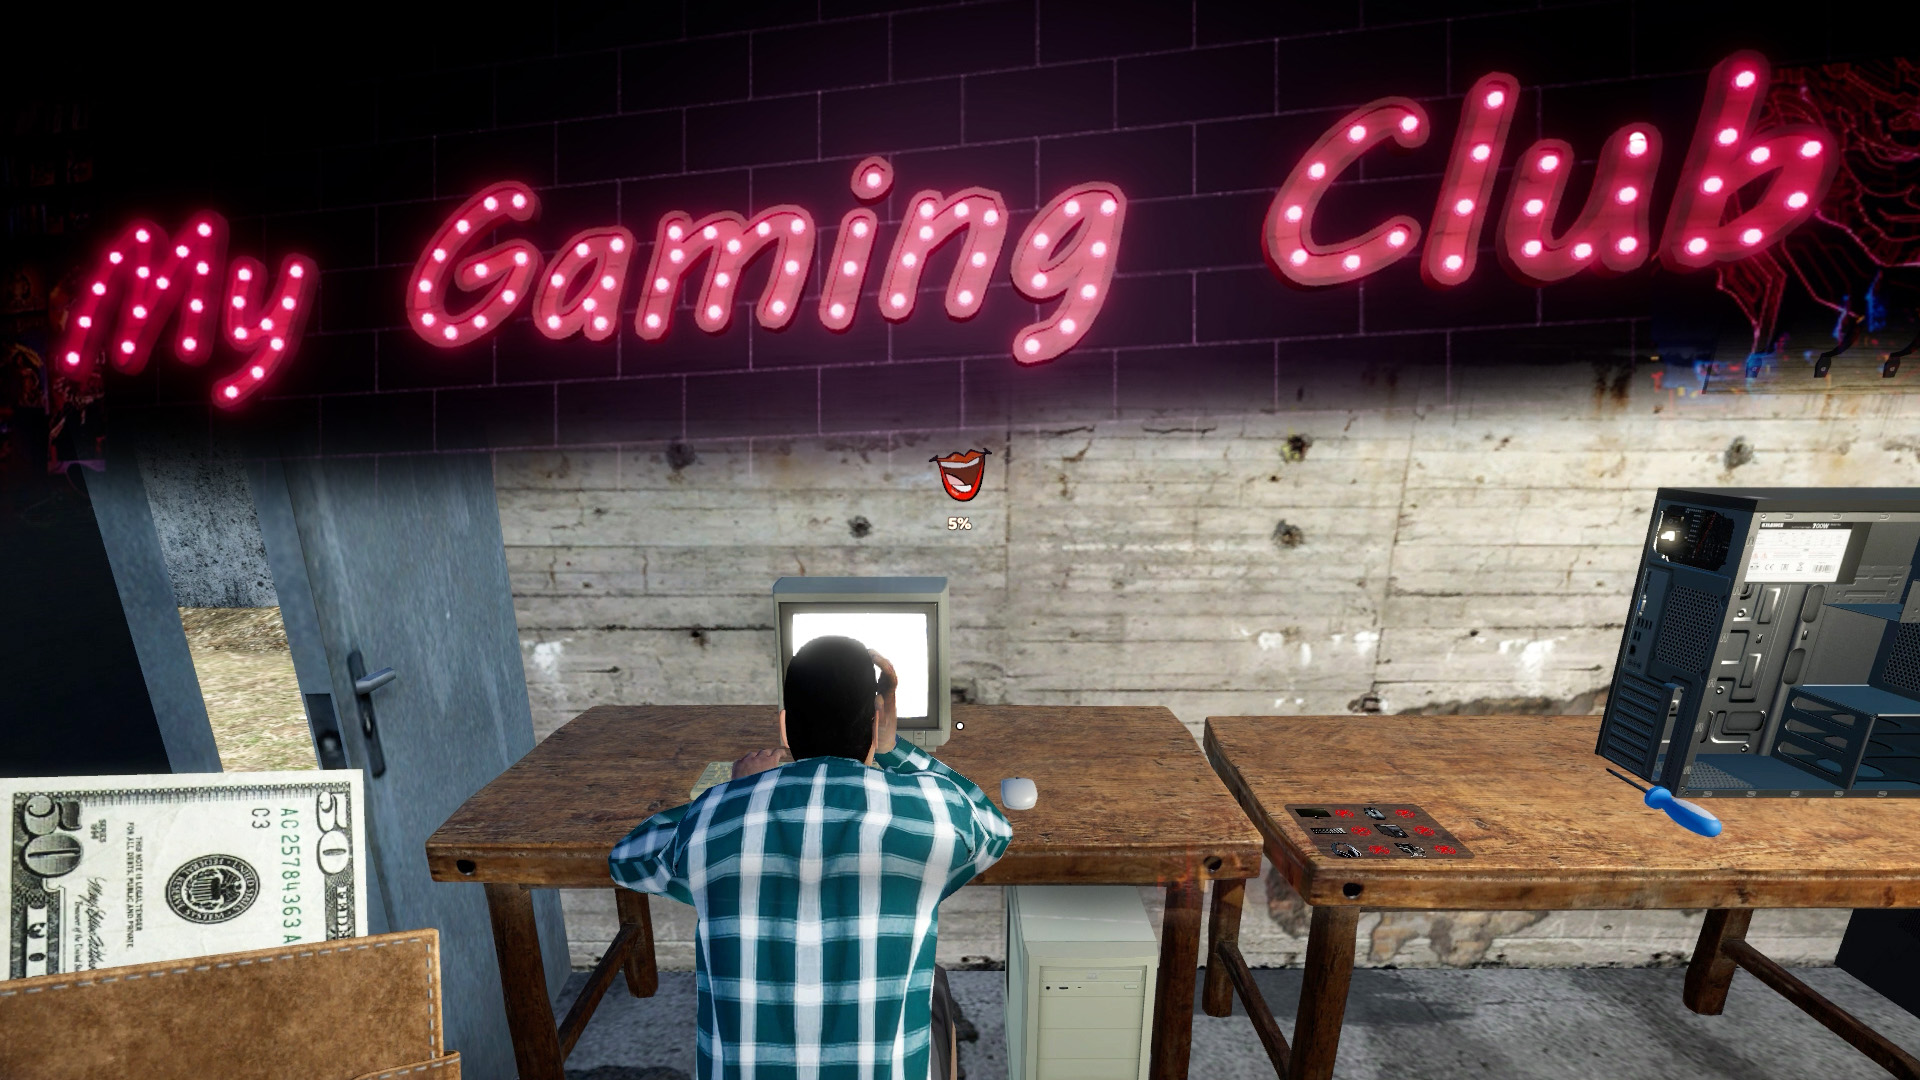 My games купить. My Gaming Club игра. My Gaming Club карта. Играем в игру (my Gaming Club). My Gaming Club читы.